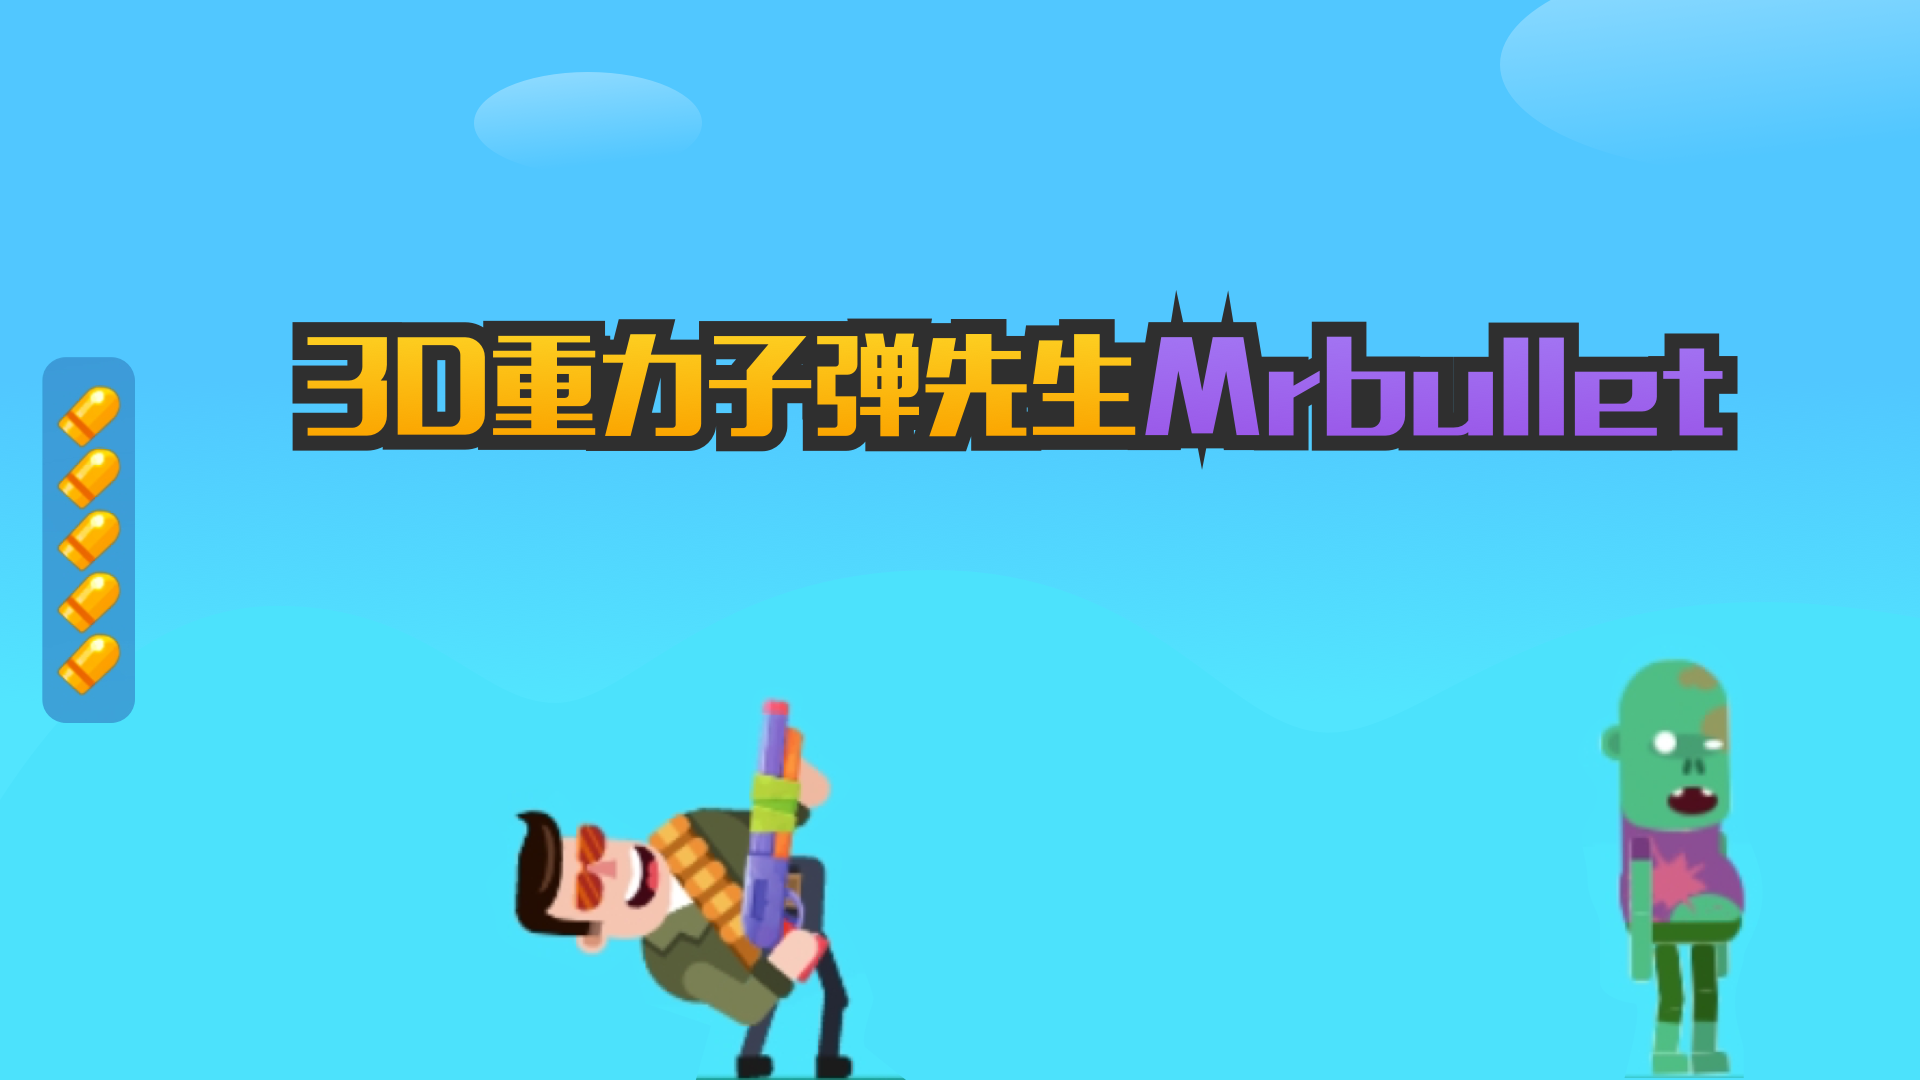 Banner of 3D-Schwerkraftkugel Mr. Bullet 1.0.0